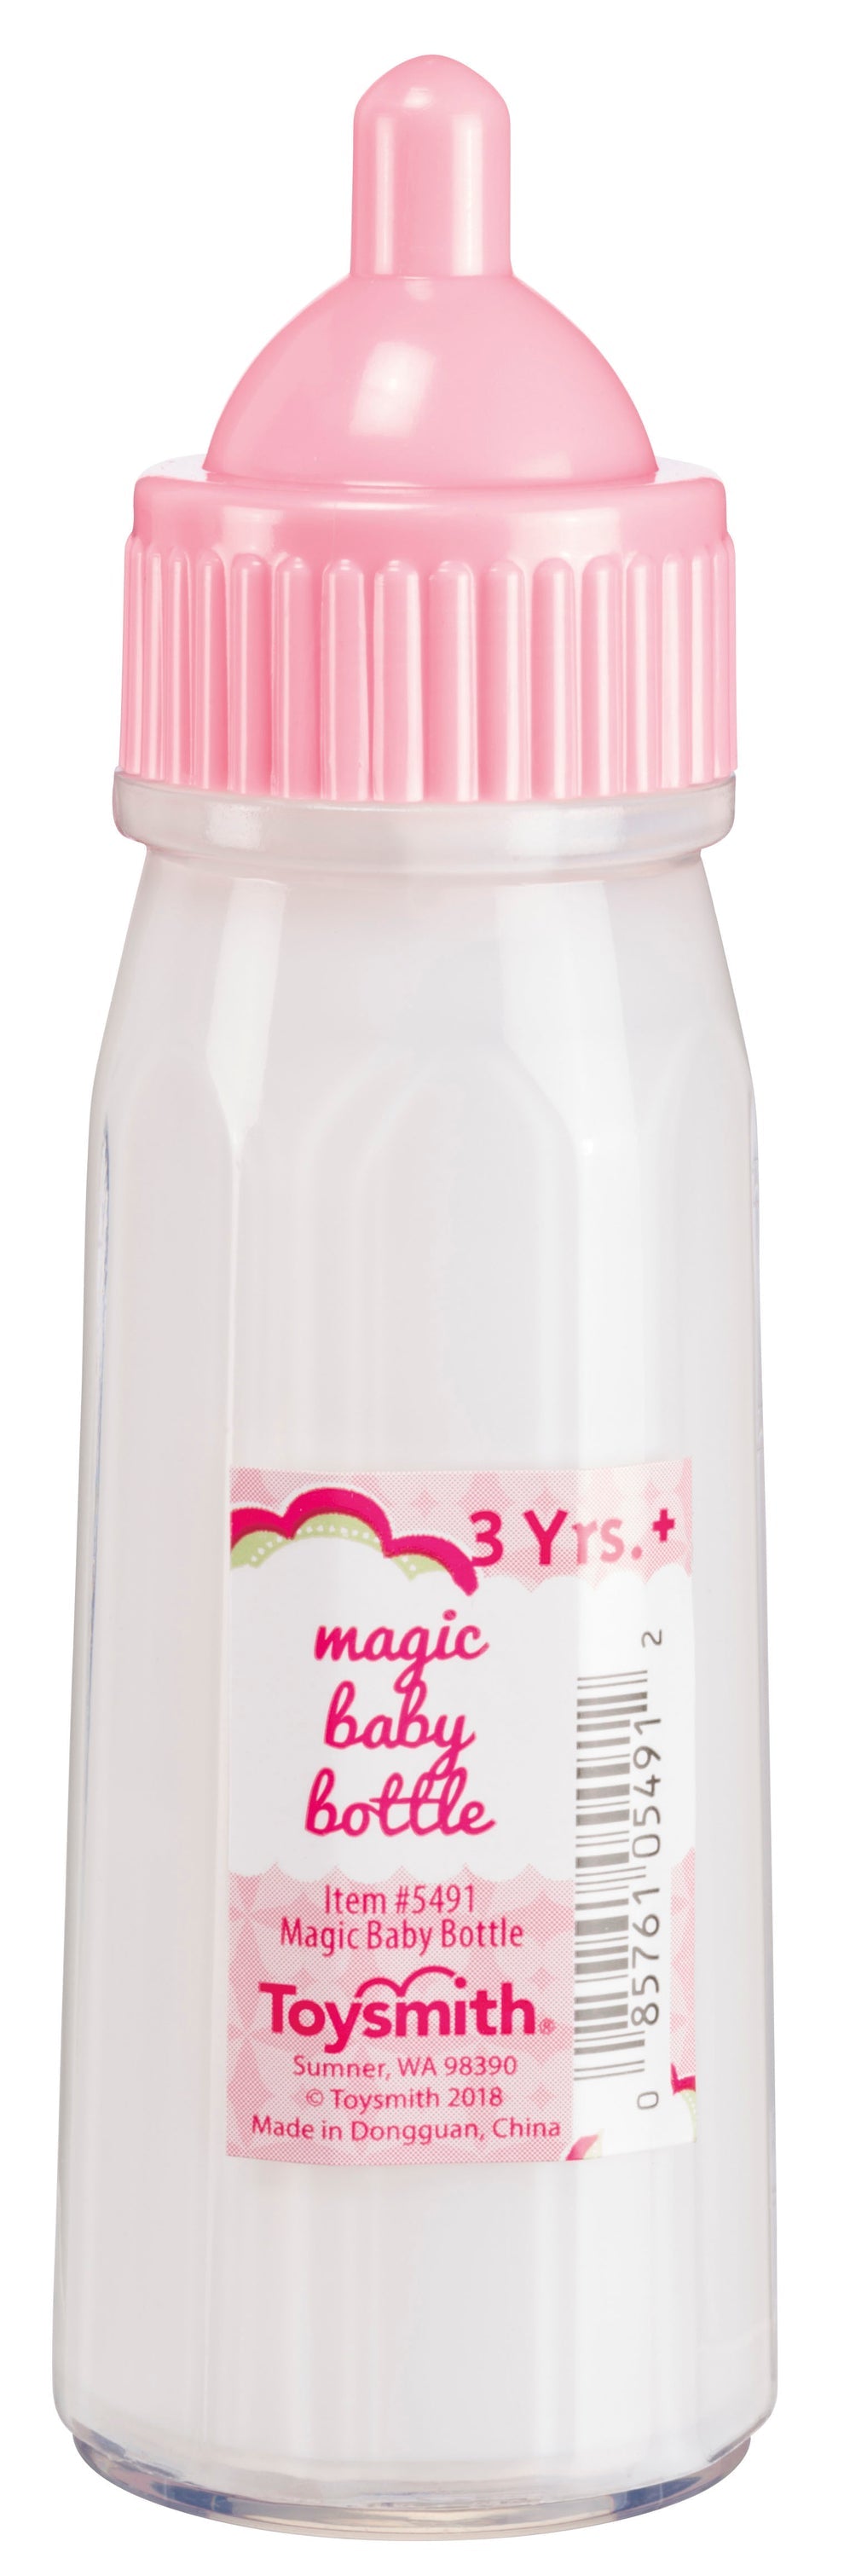 Magic Baby Bottle by Toysmith